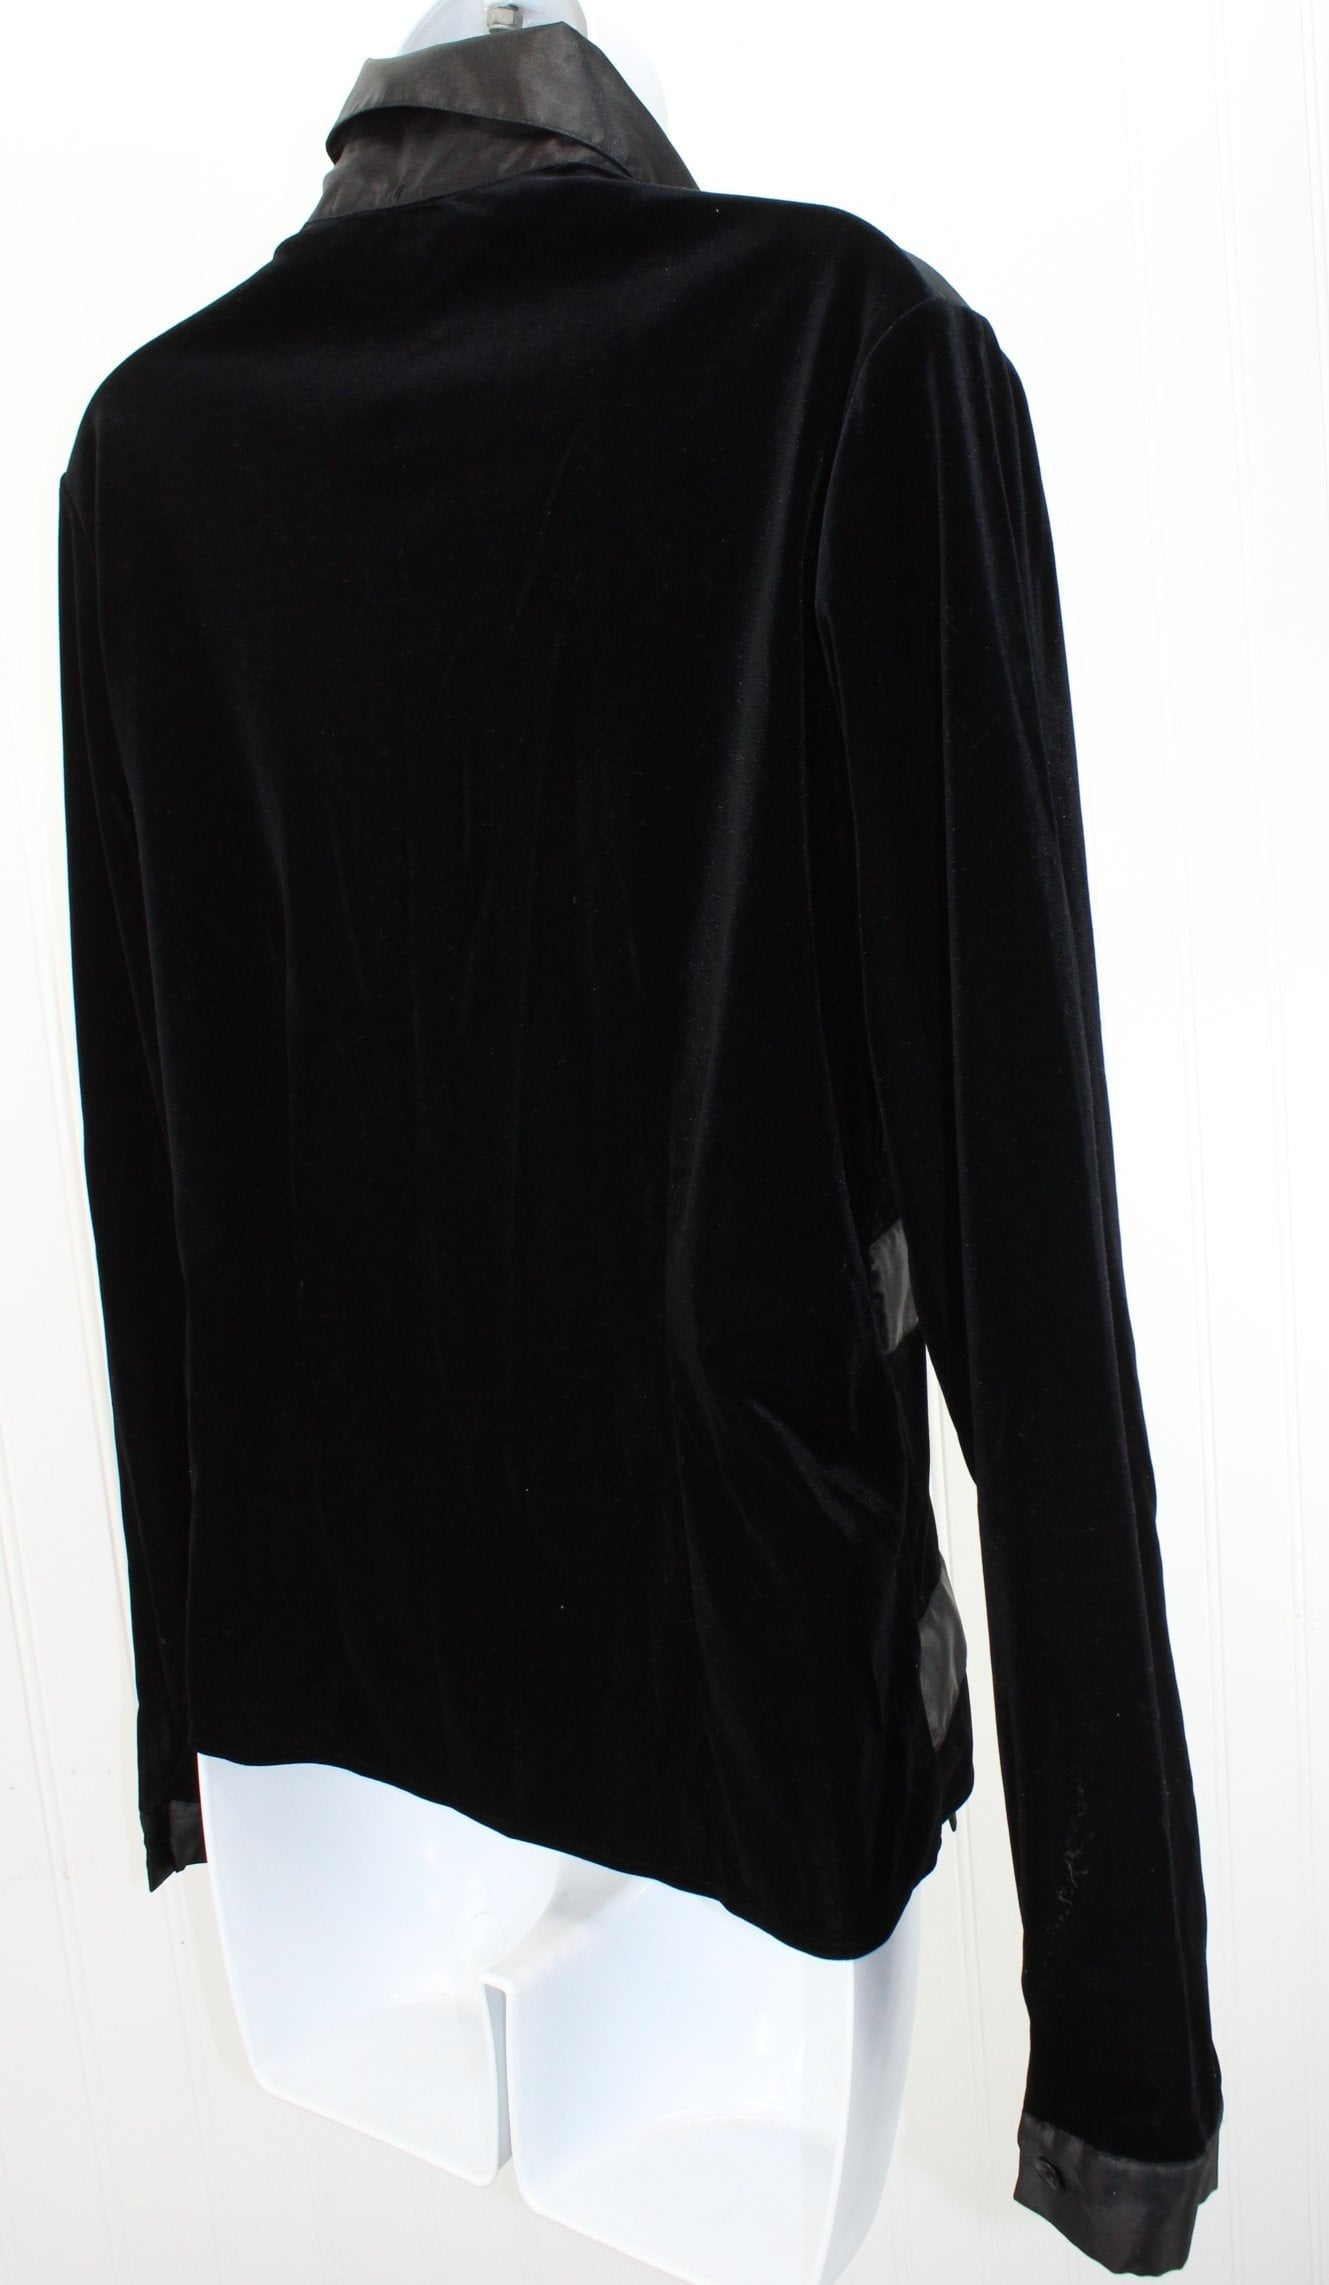 D & Y Evening Jacket - Unlined Black Velveteen Ribbon Ties - Medium great with black jeans